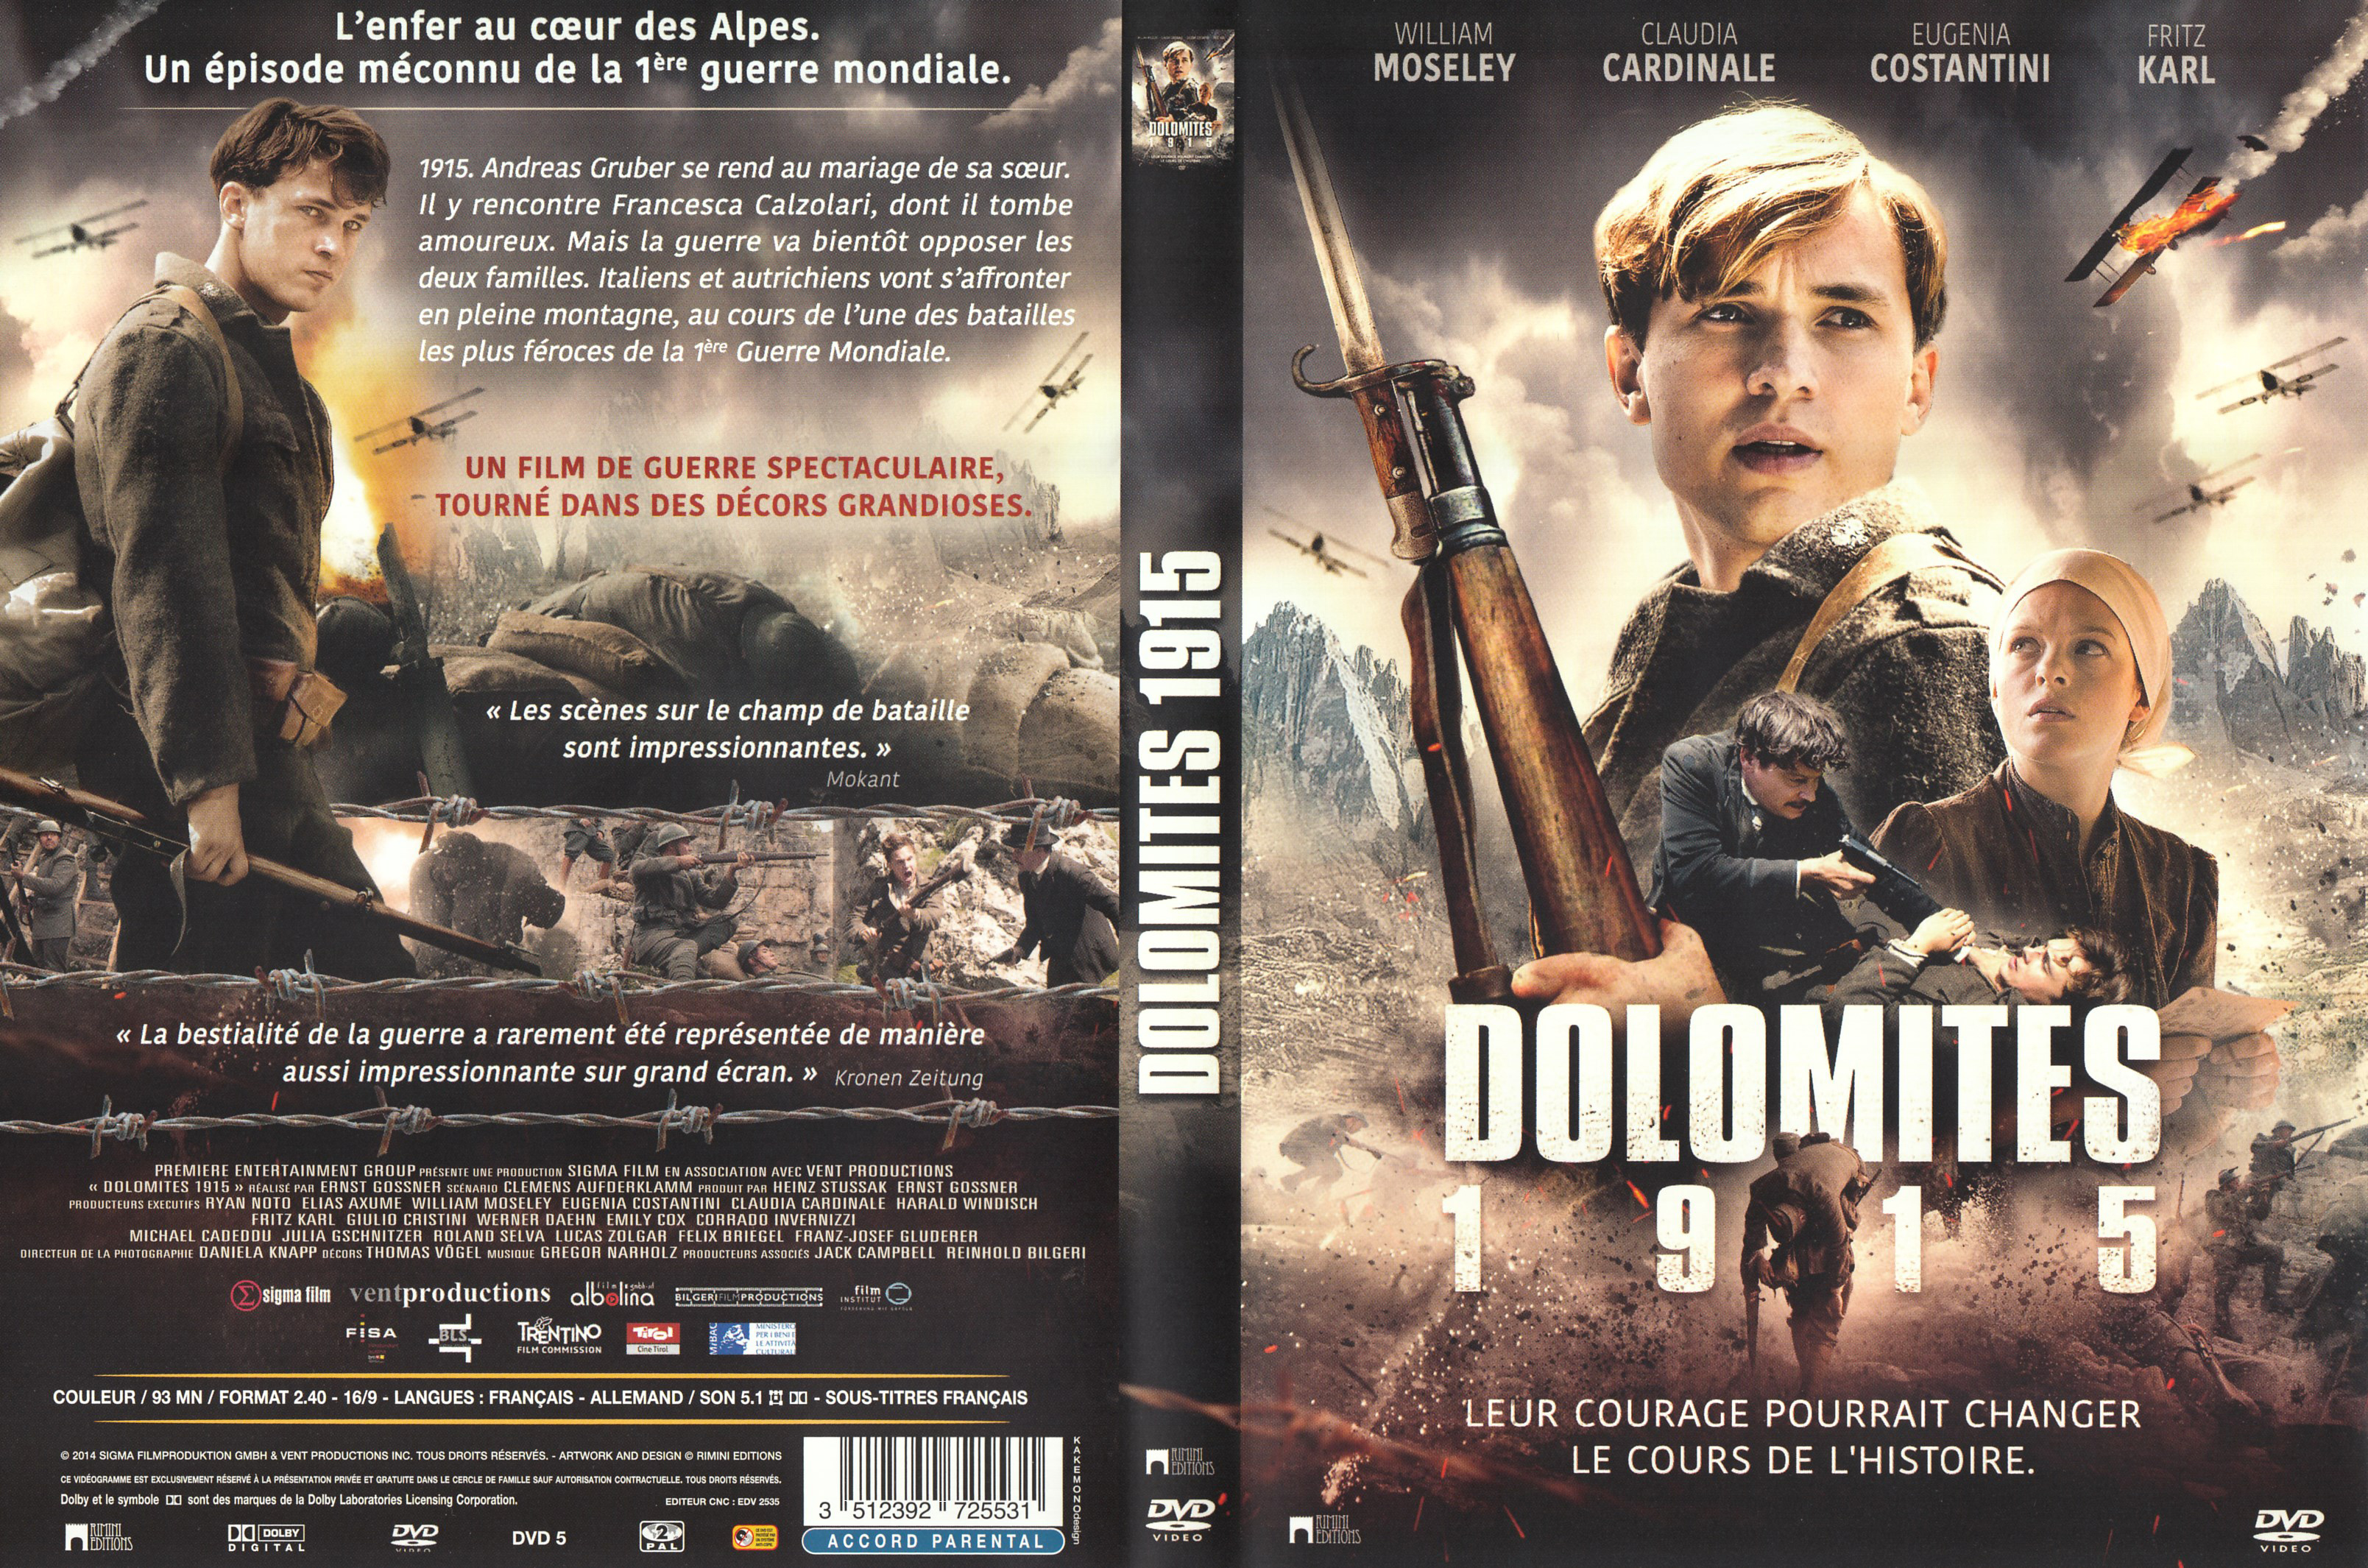 Jaquette DVD Dolomites 1915